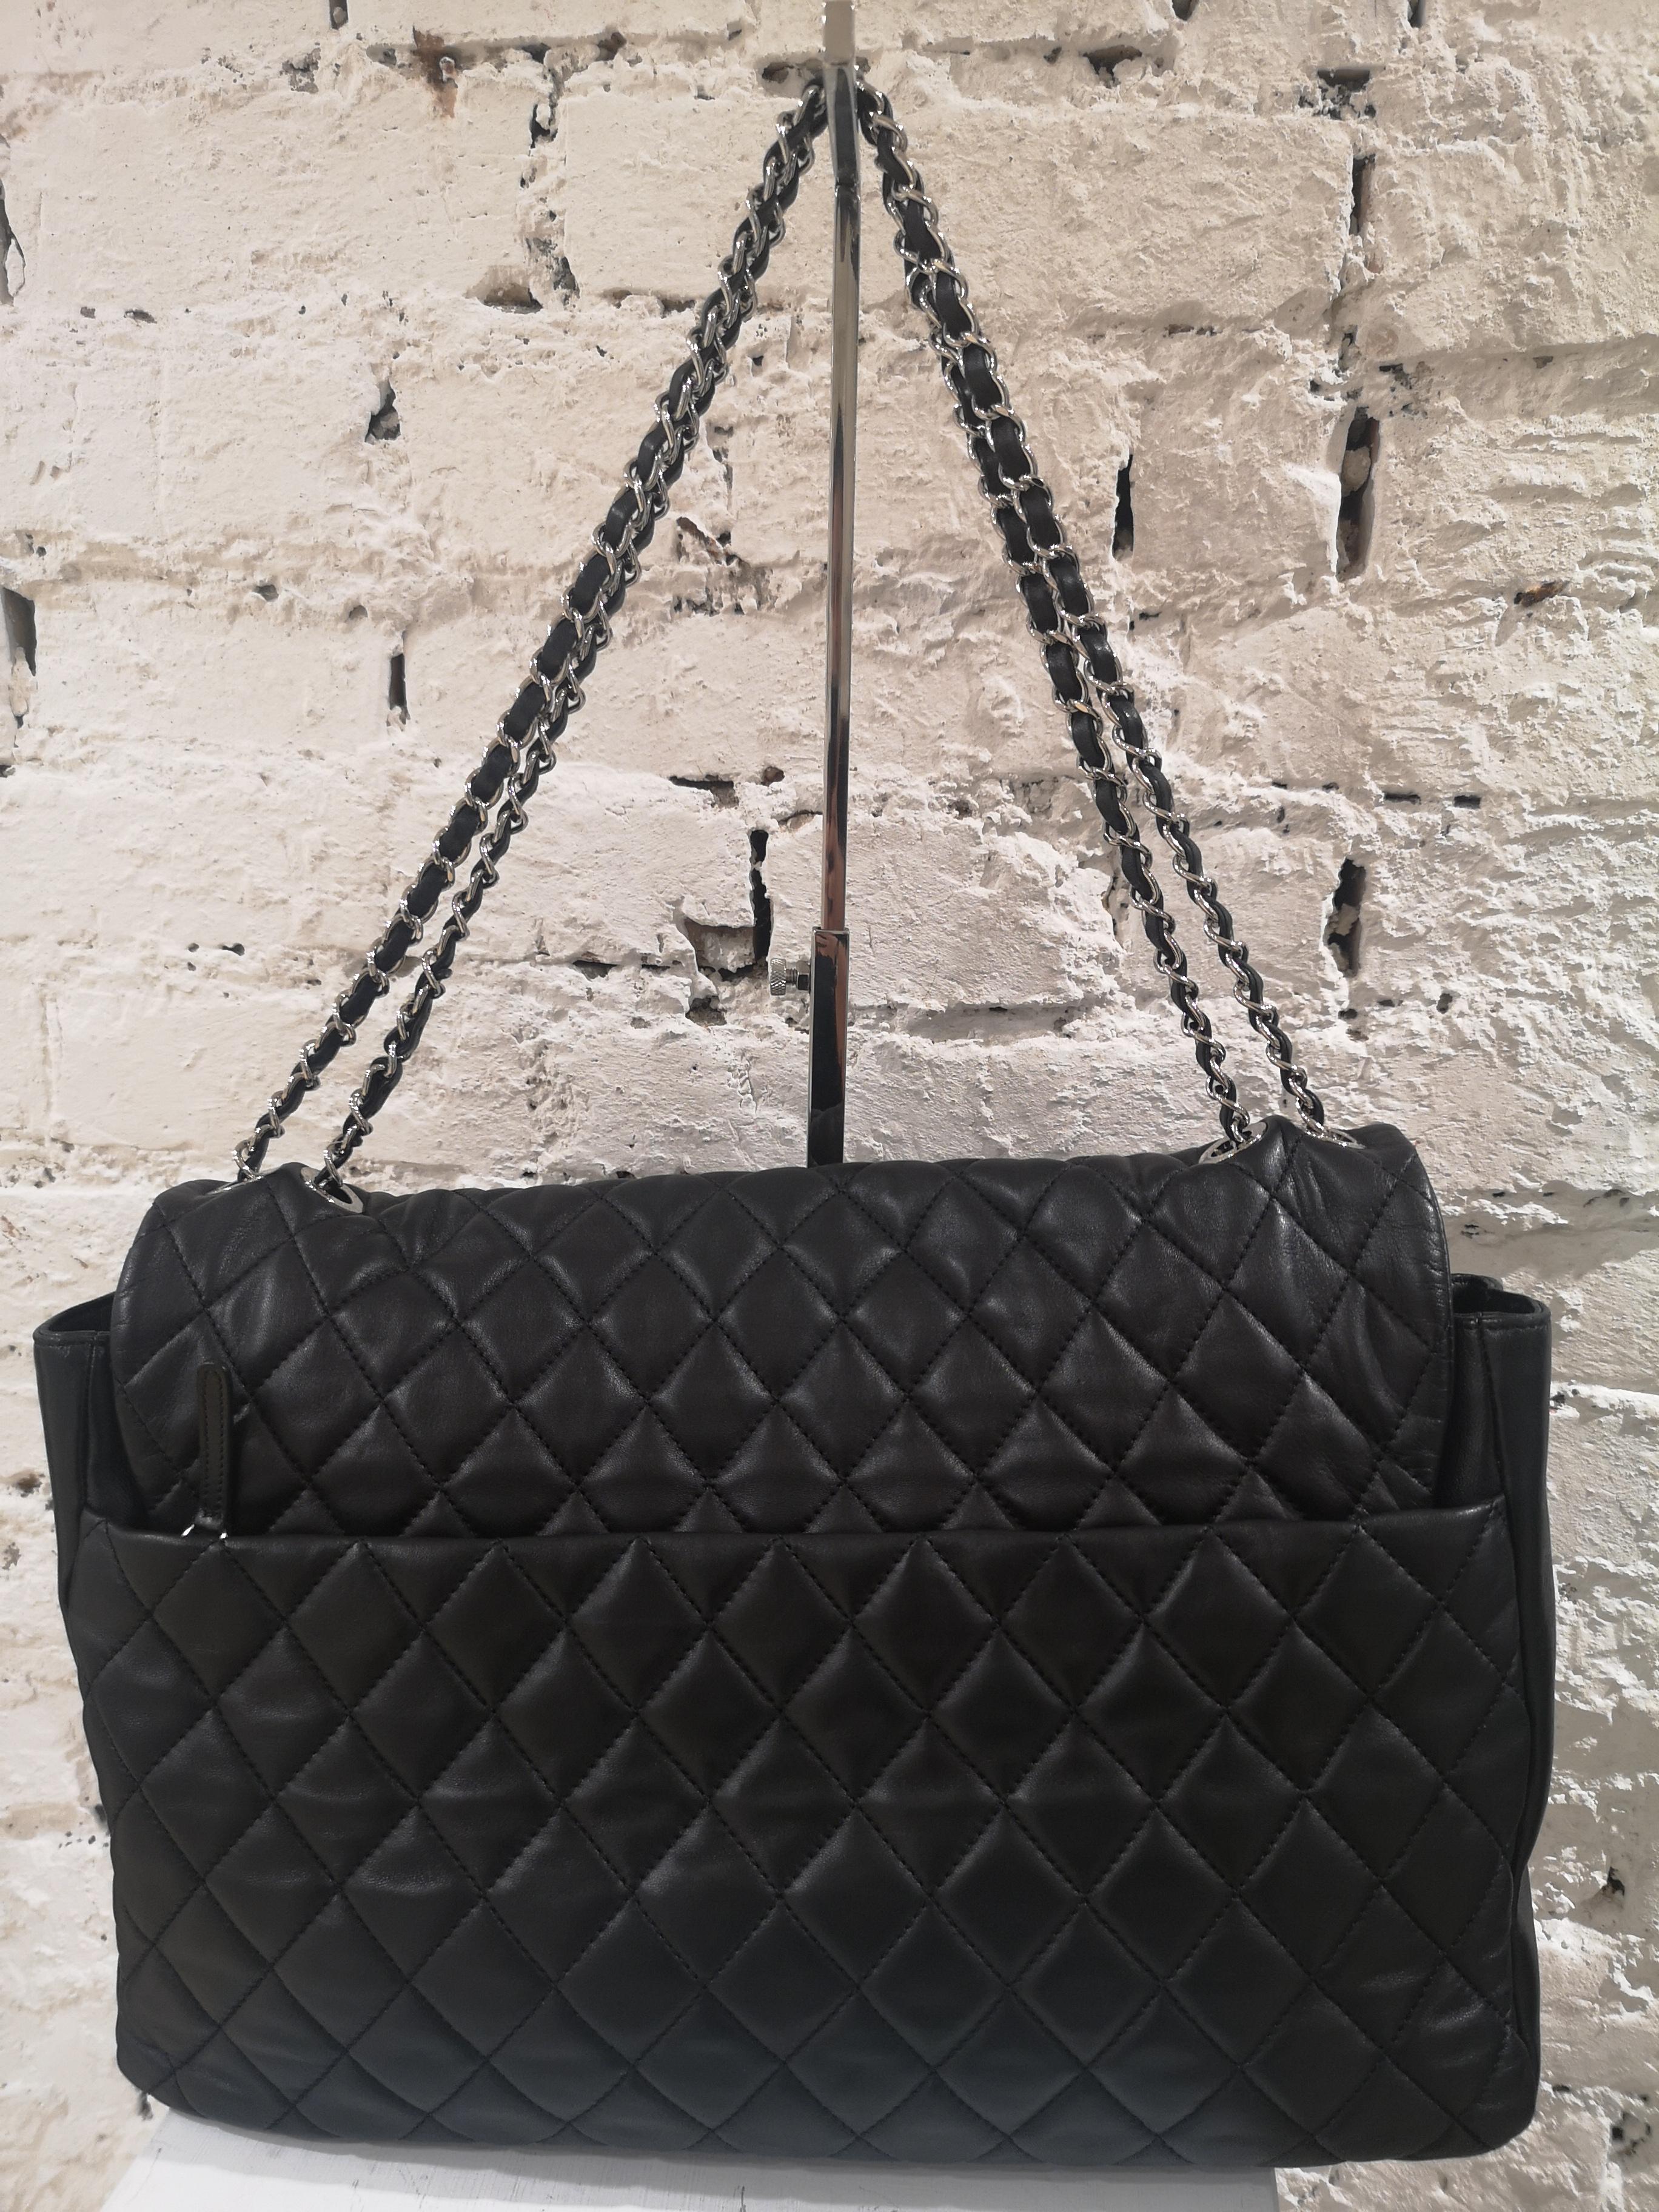 Chanel maxi jumbo black leather shoulder bag 5